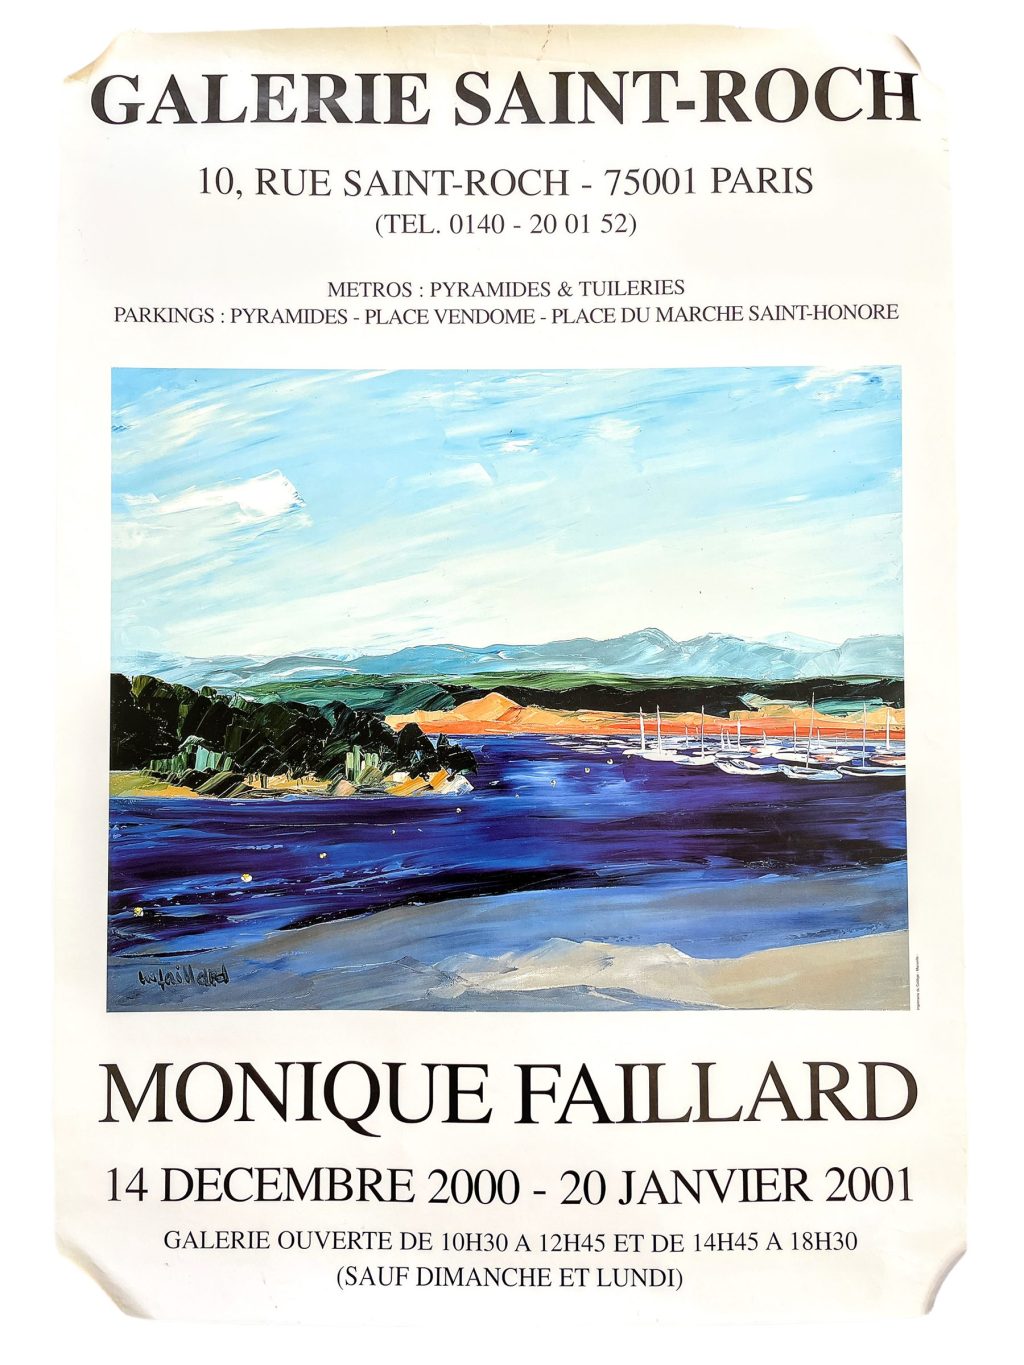 Vintage French Monique Faillard Galerie Saint-Roch Paris Gallery Original Exhibition Poster Wall Decor Painting Display c2000 / EVE